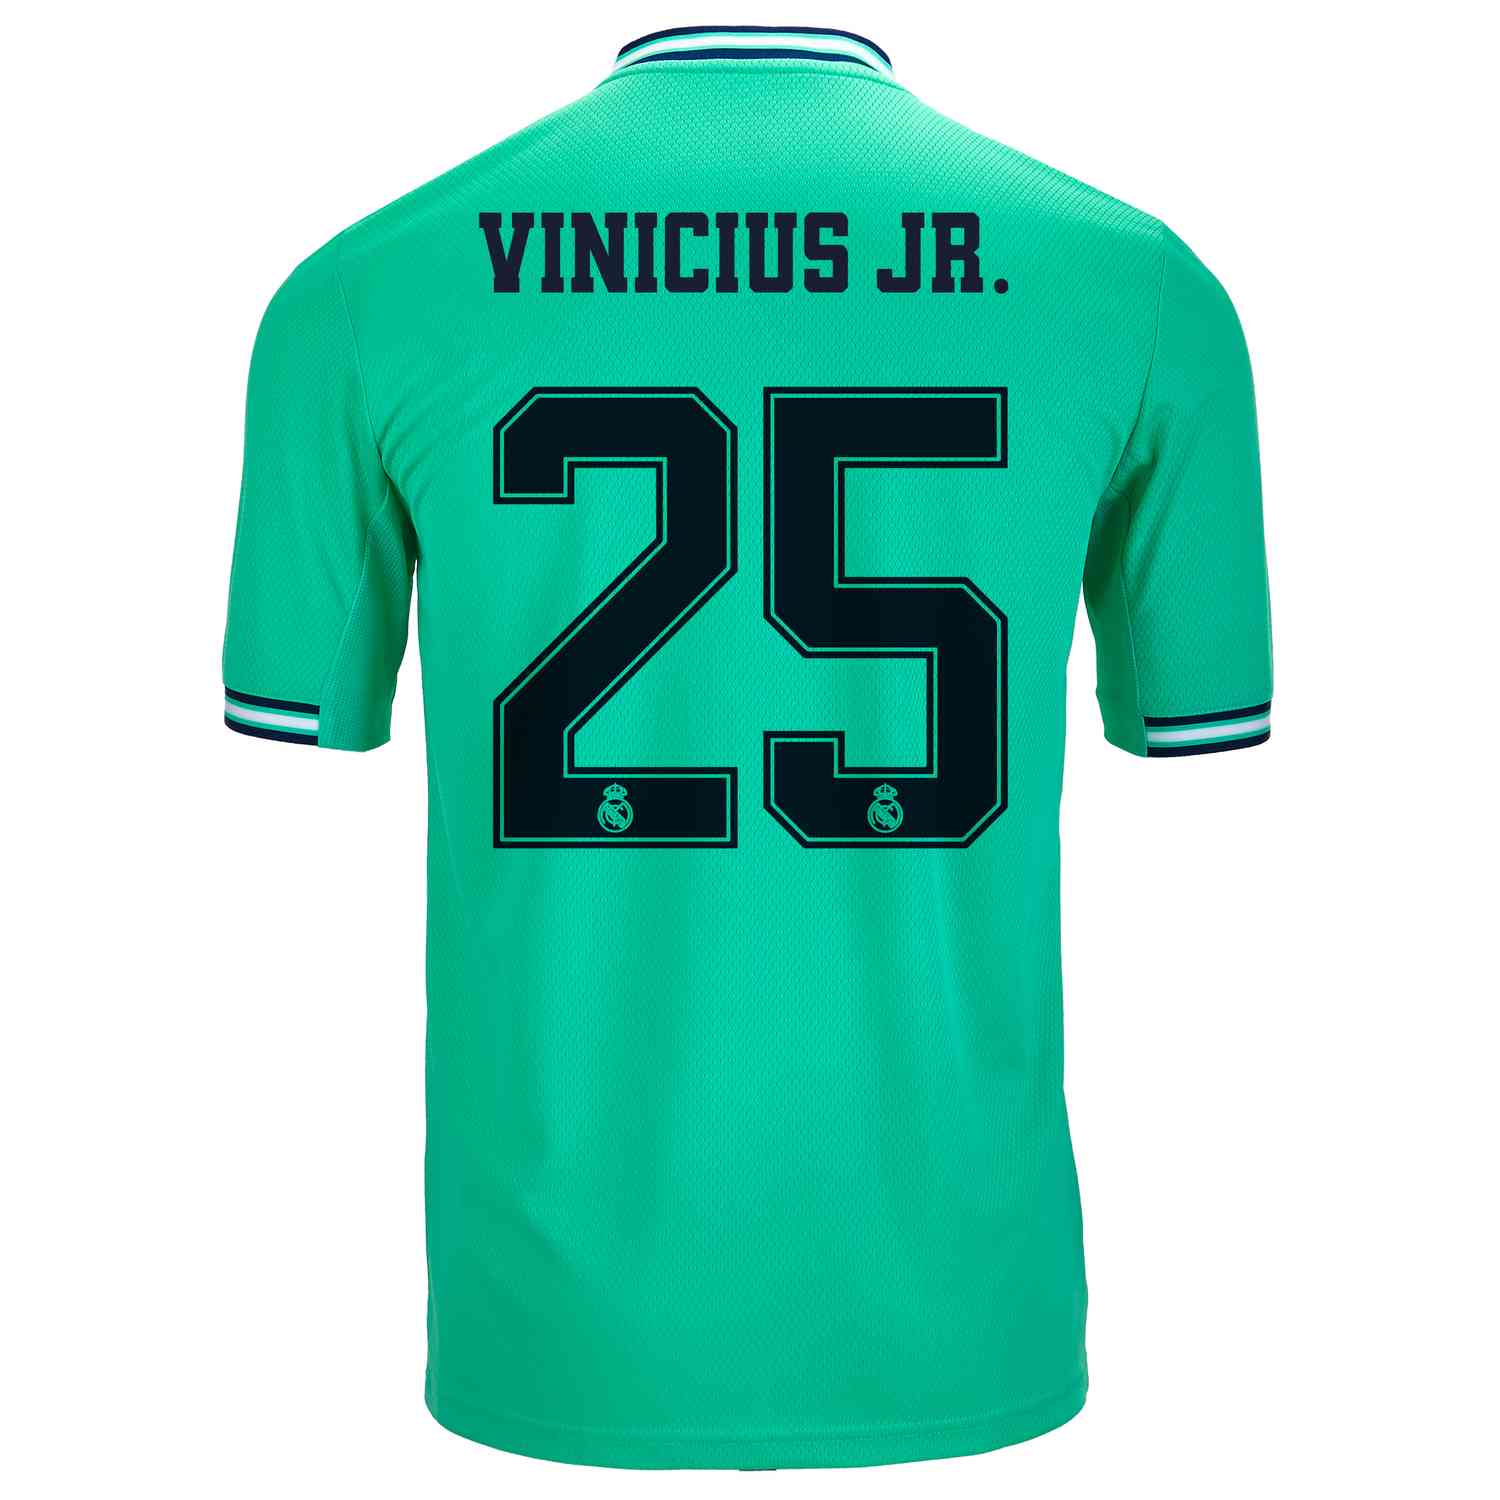 vinicius jr real madrid jersey